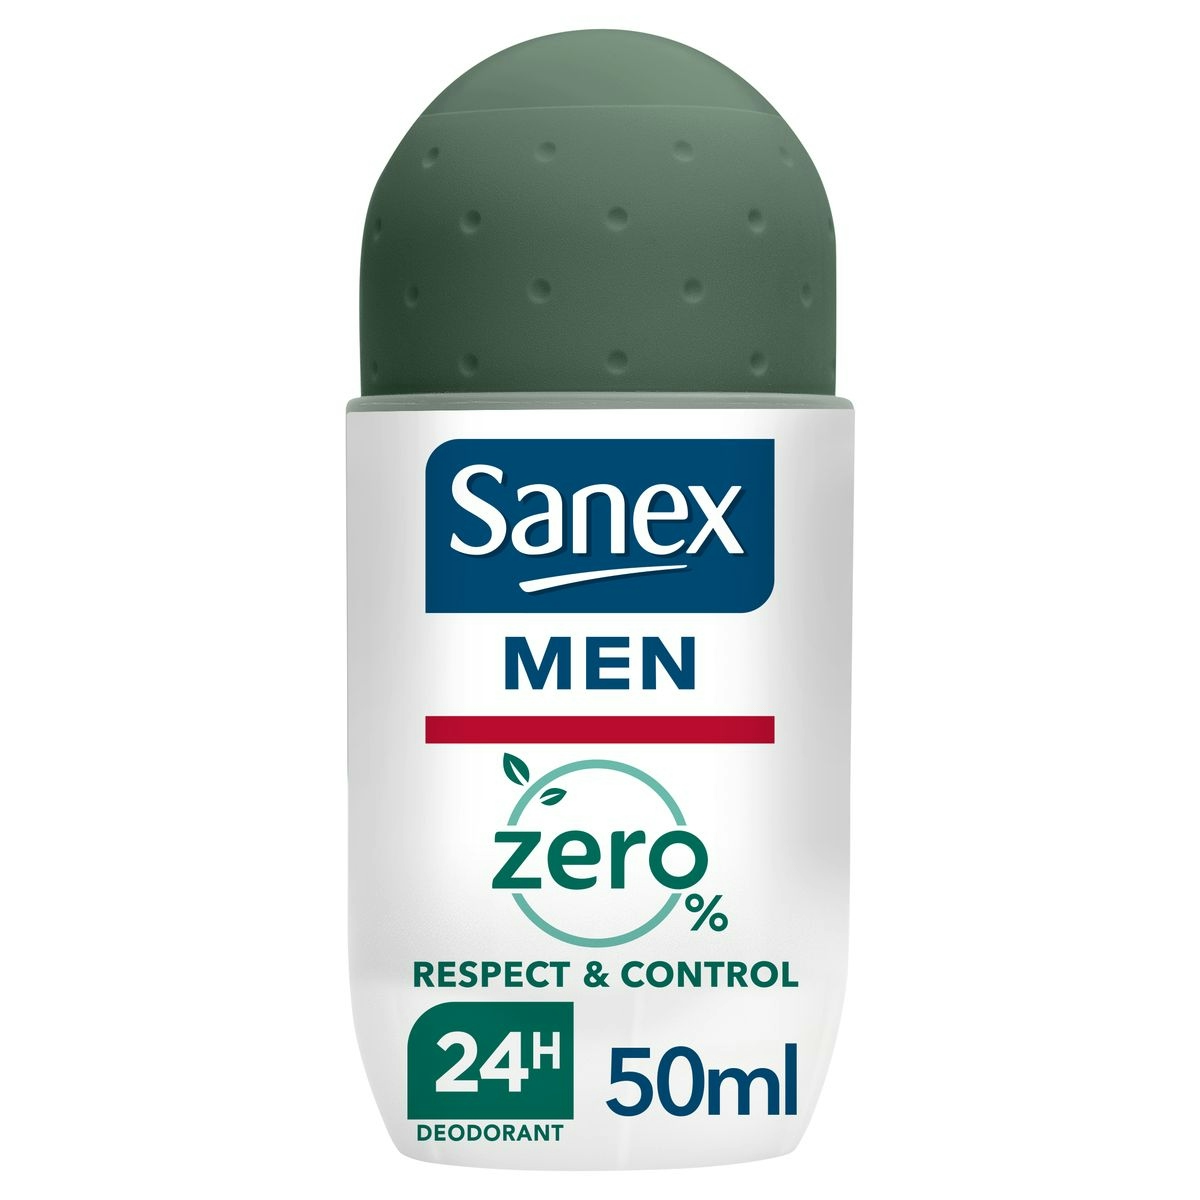 SANEX Men desodorante zero % piel normal roll on 50 ml